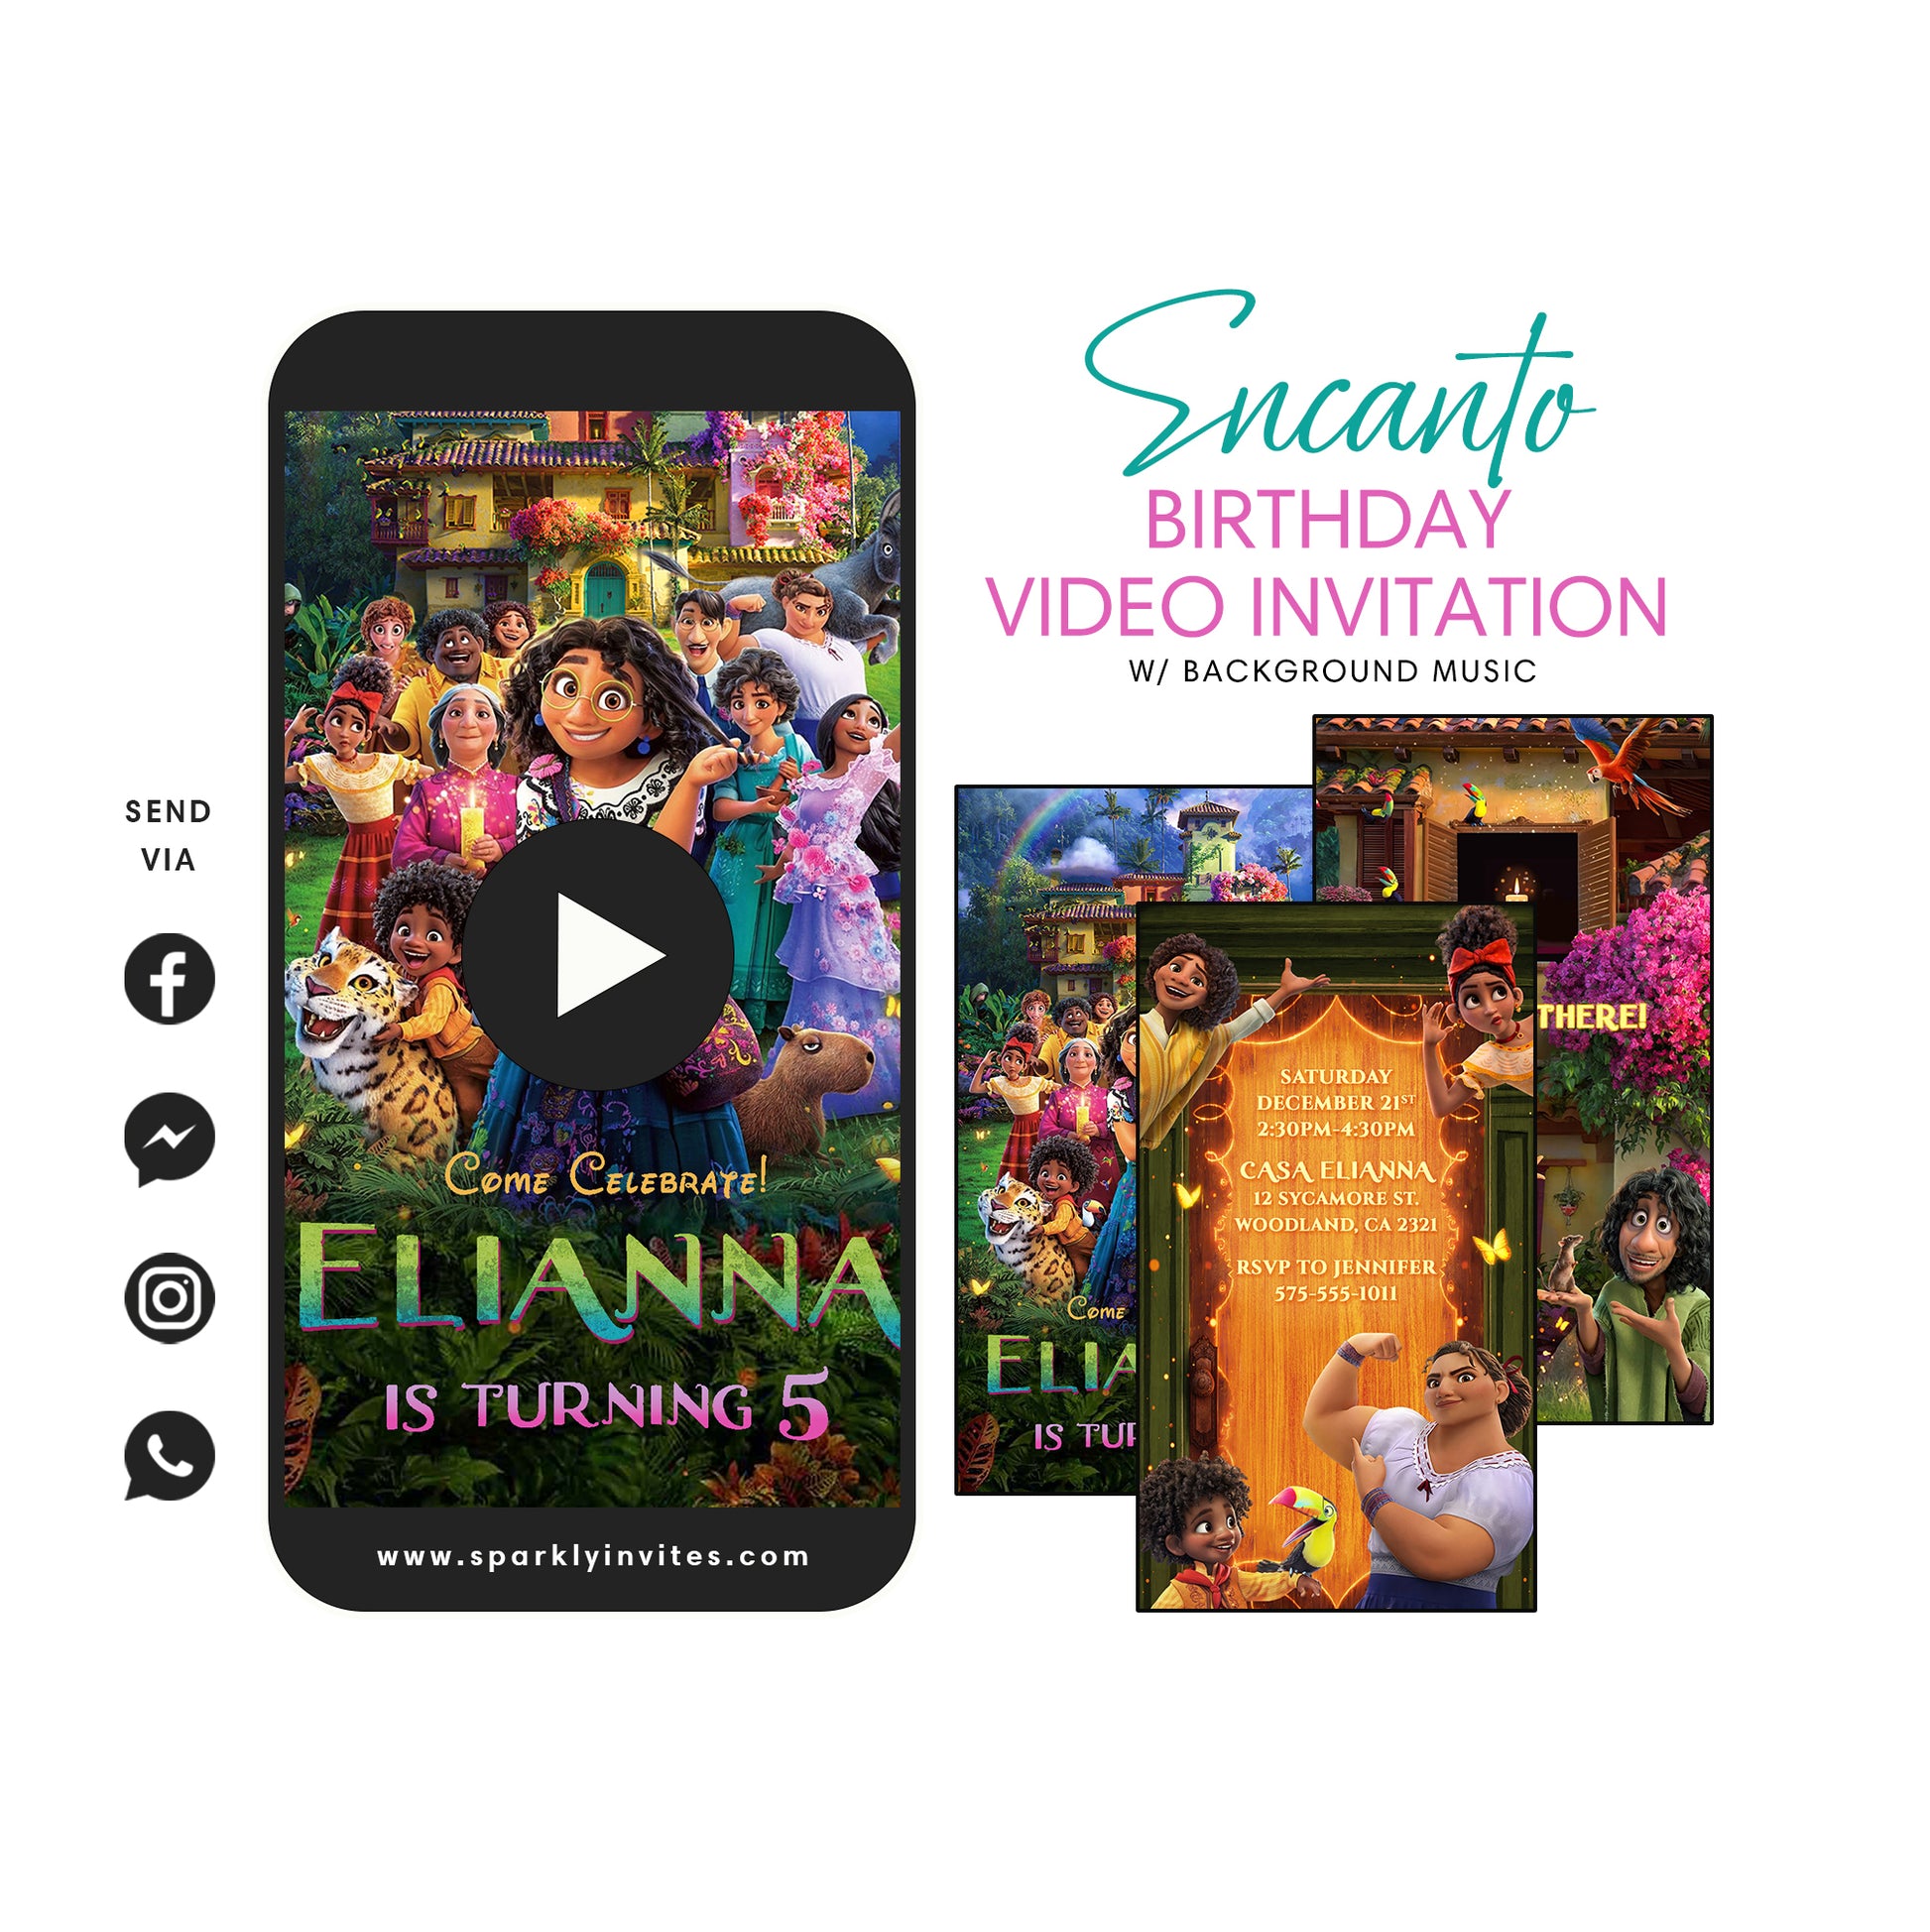 Encanto Video Invitation